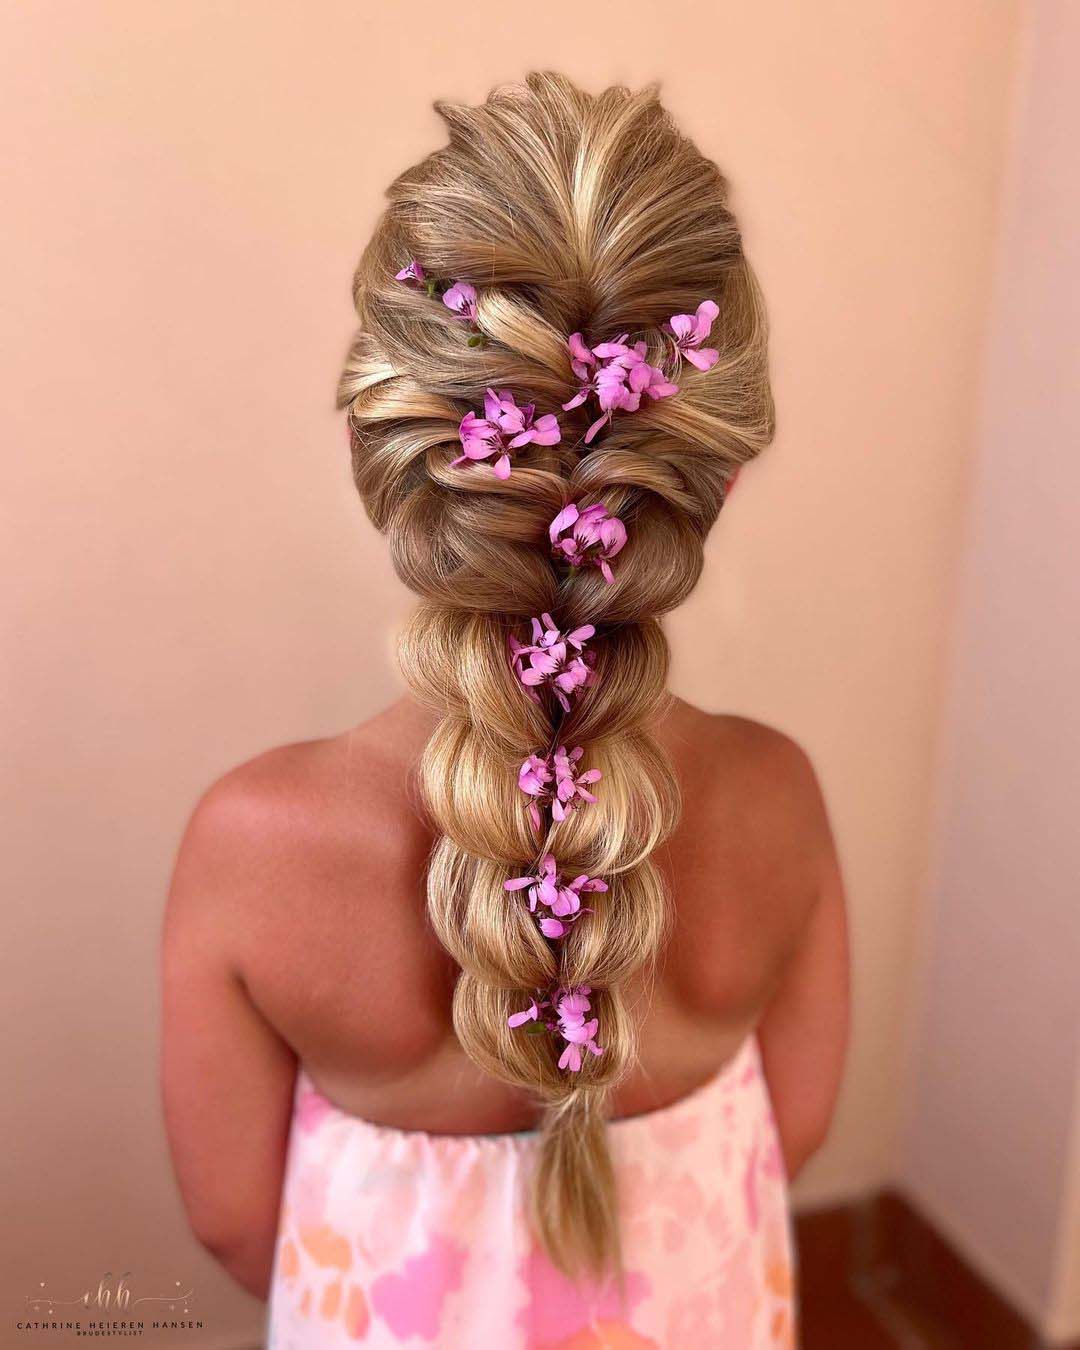 bridesmaid hairstyles mermaid braid with flowers for little girl cathrineheierenhansen